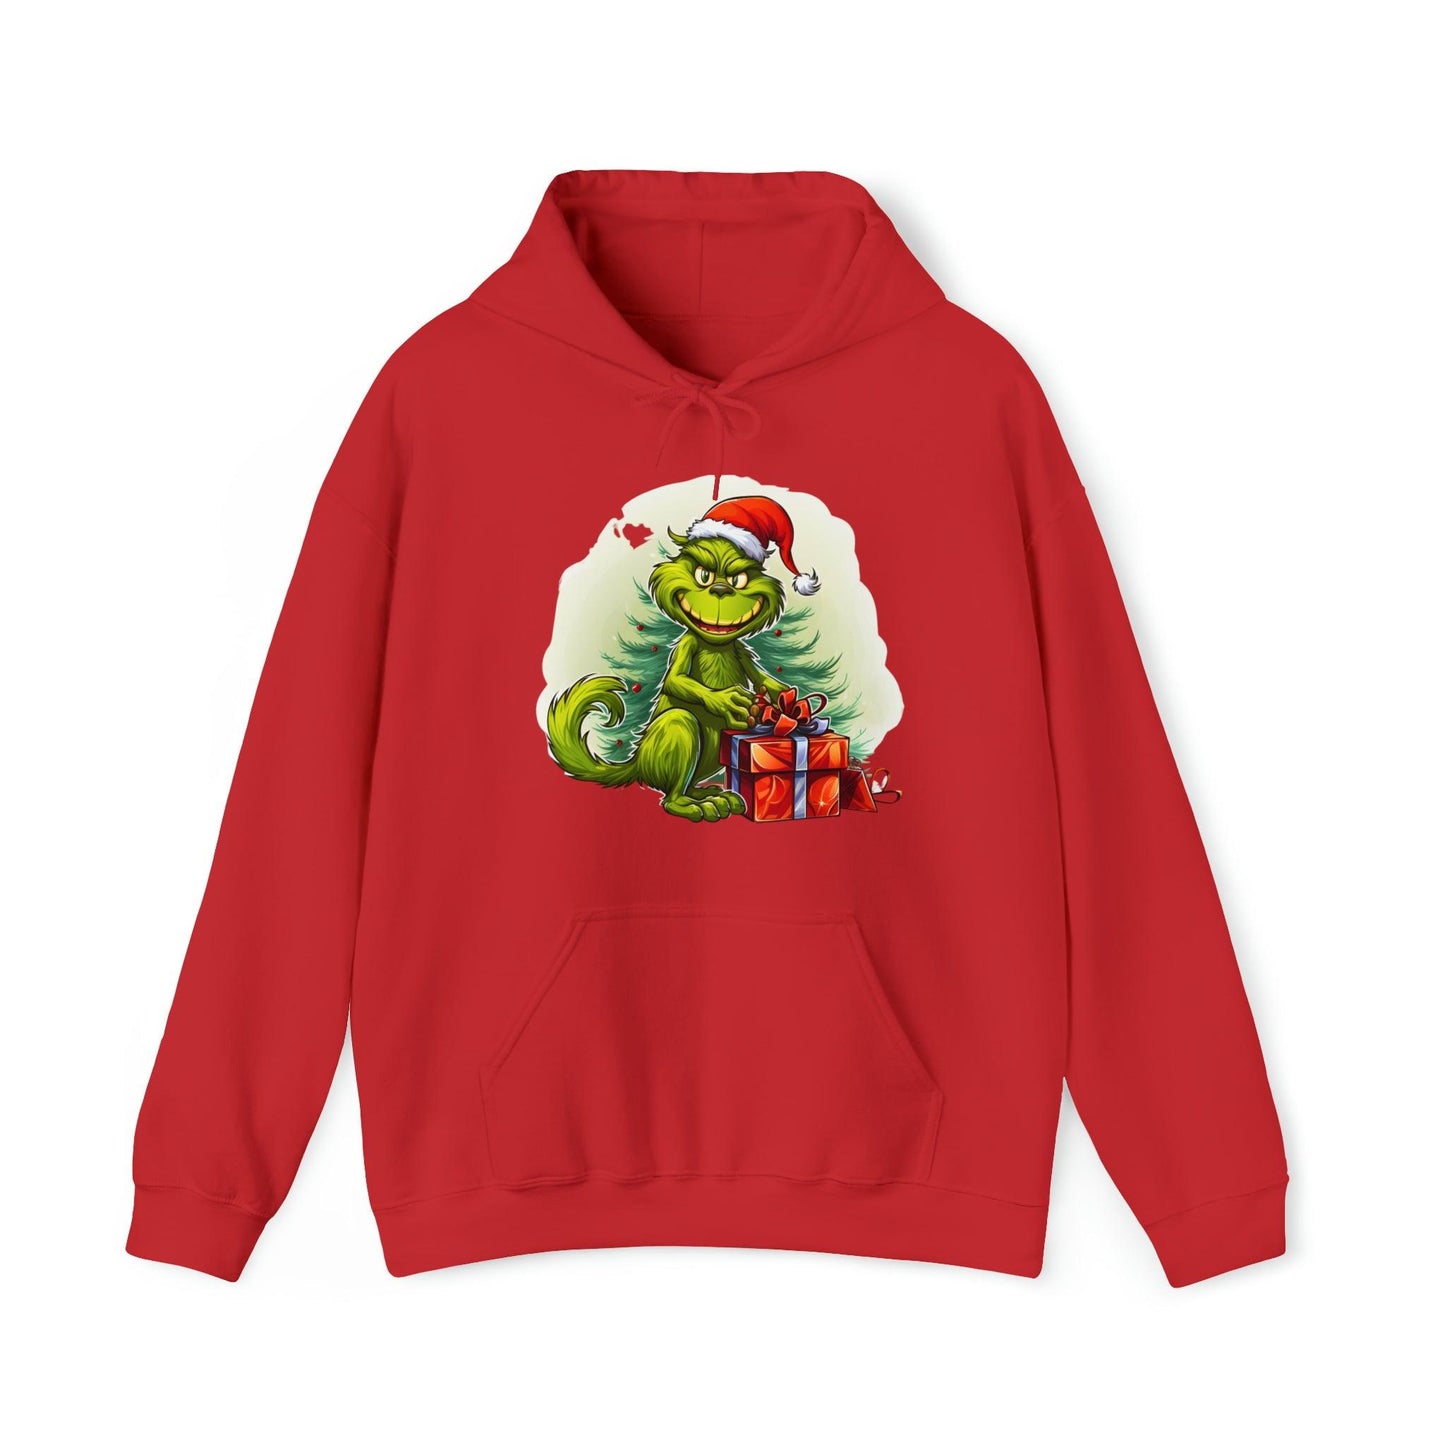 Grinch Hooded Sweatshirt Grinch Christmas Sweatshirt Christmas Sweater Truck Pullover Christmas Tree Sweat Pine Tree Pullover Grinch With a Mug - Giftsmojo